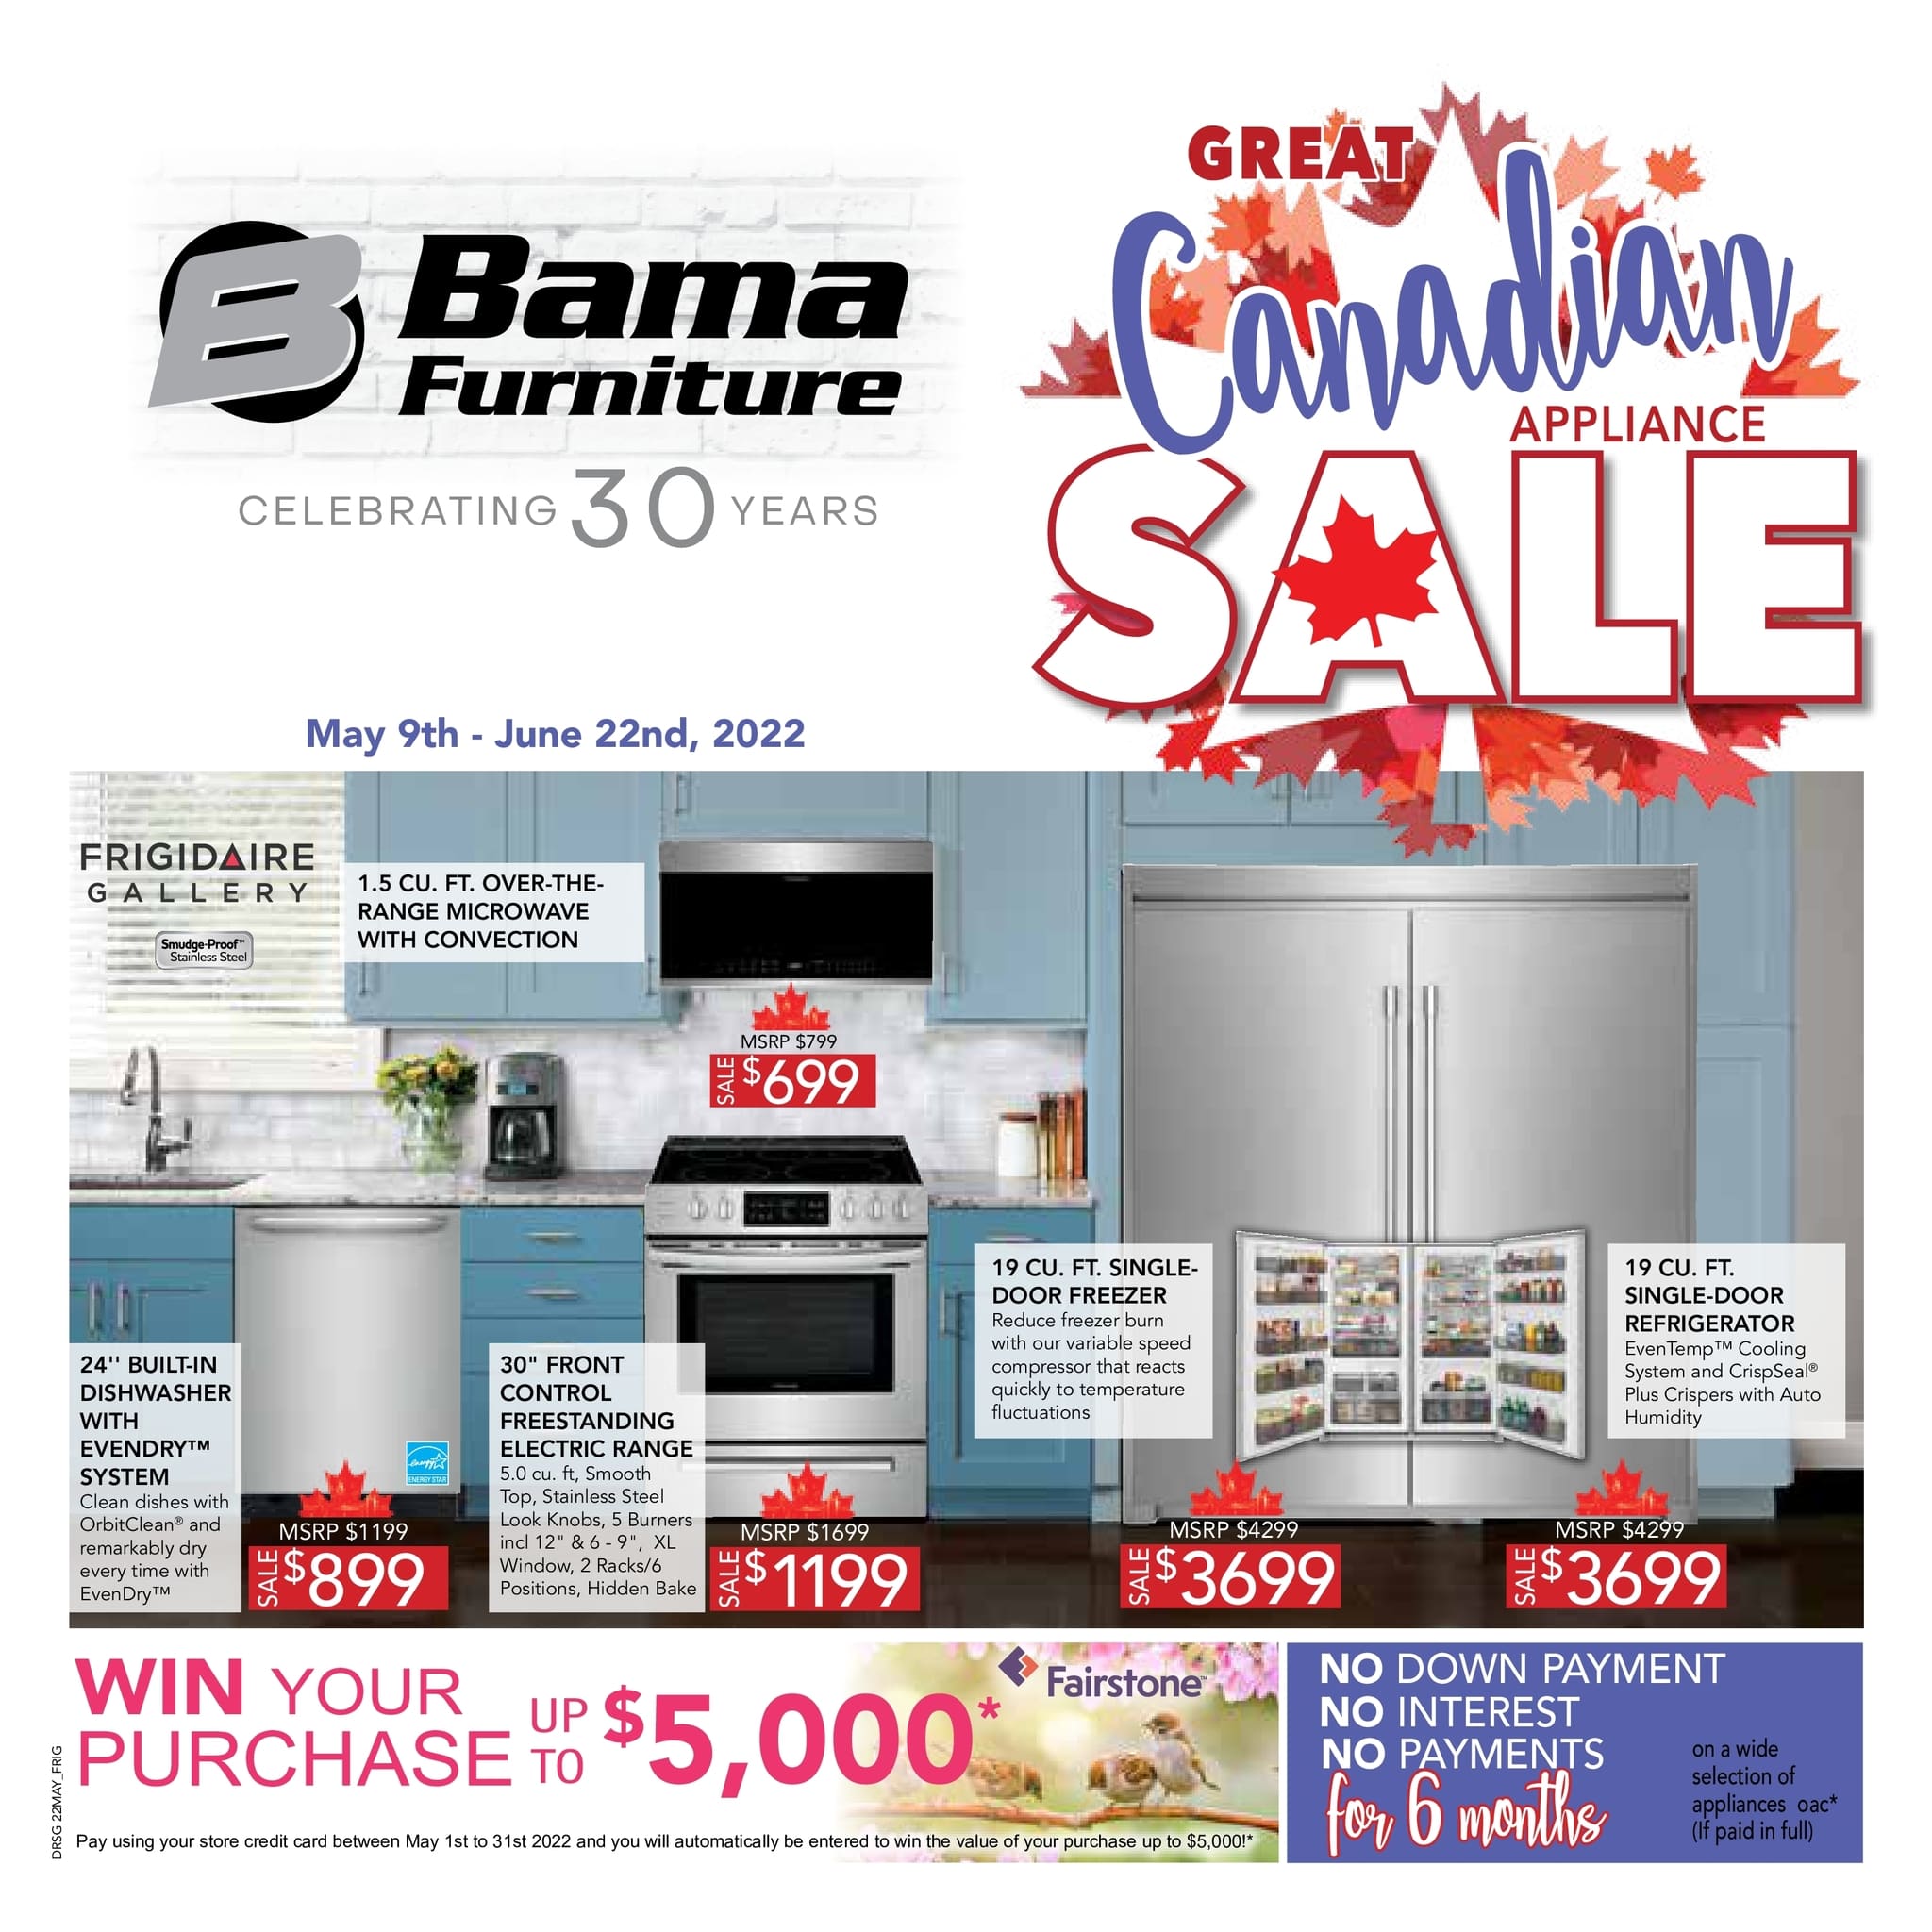 Bama Furniture - Great Canadian Appliance Sale